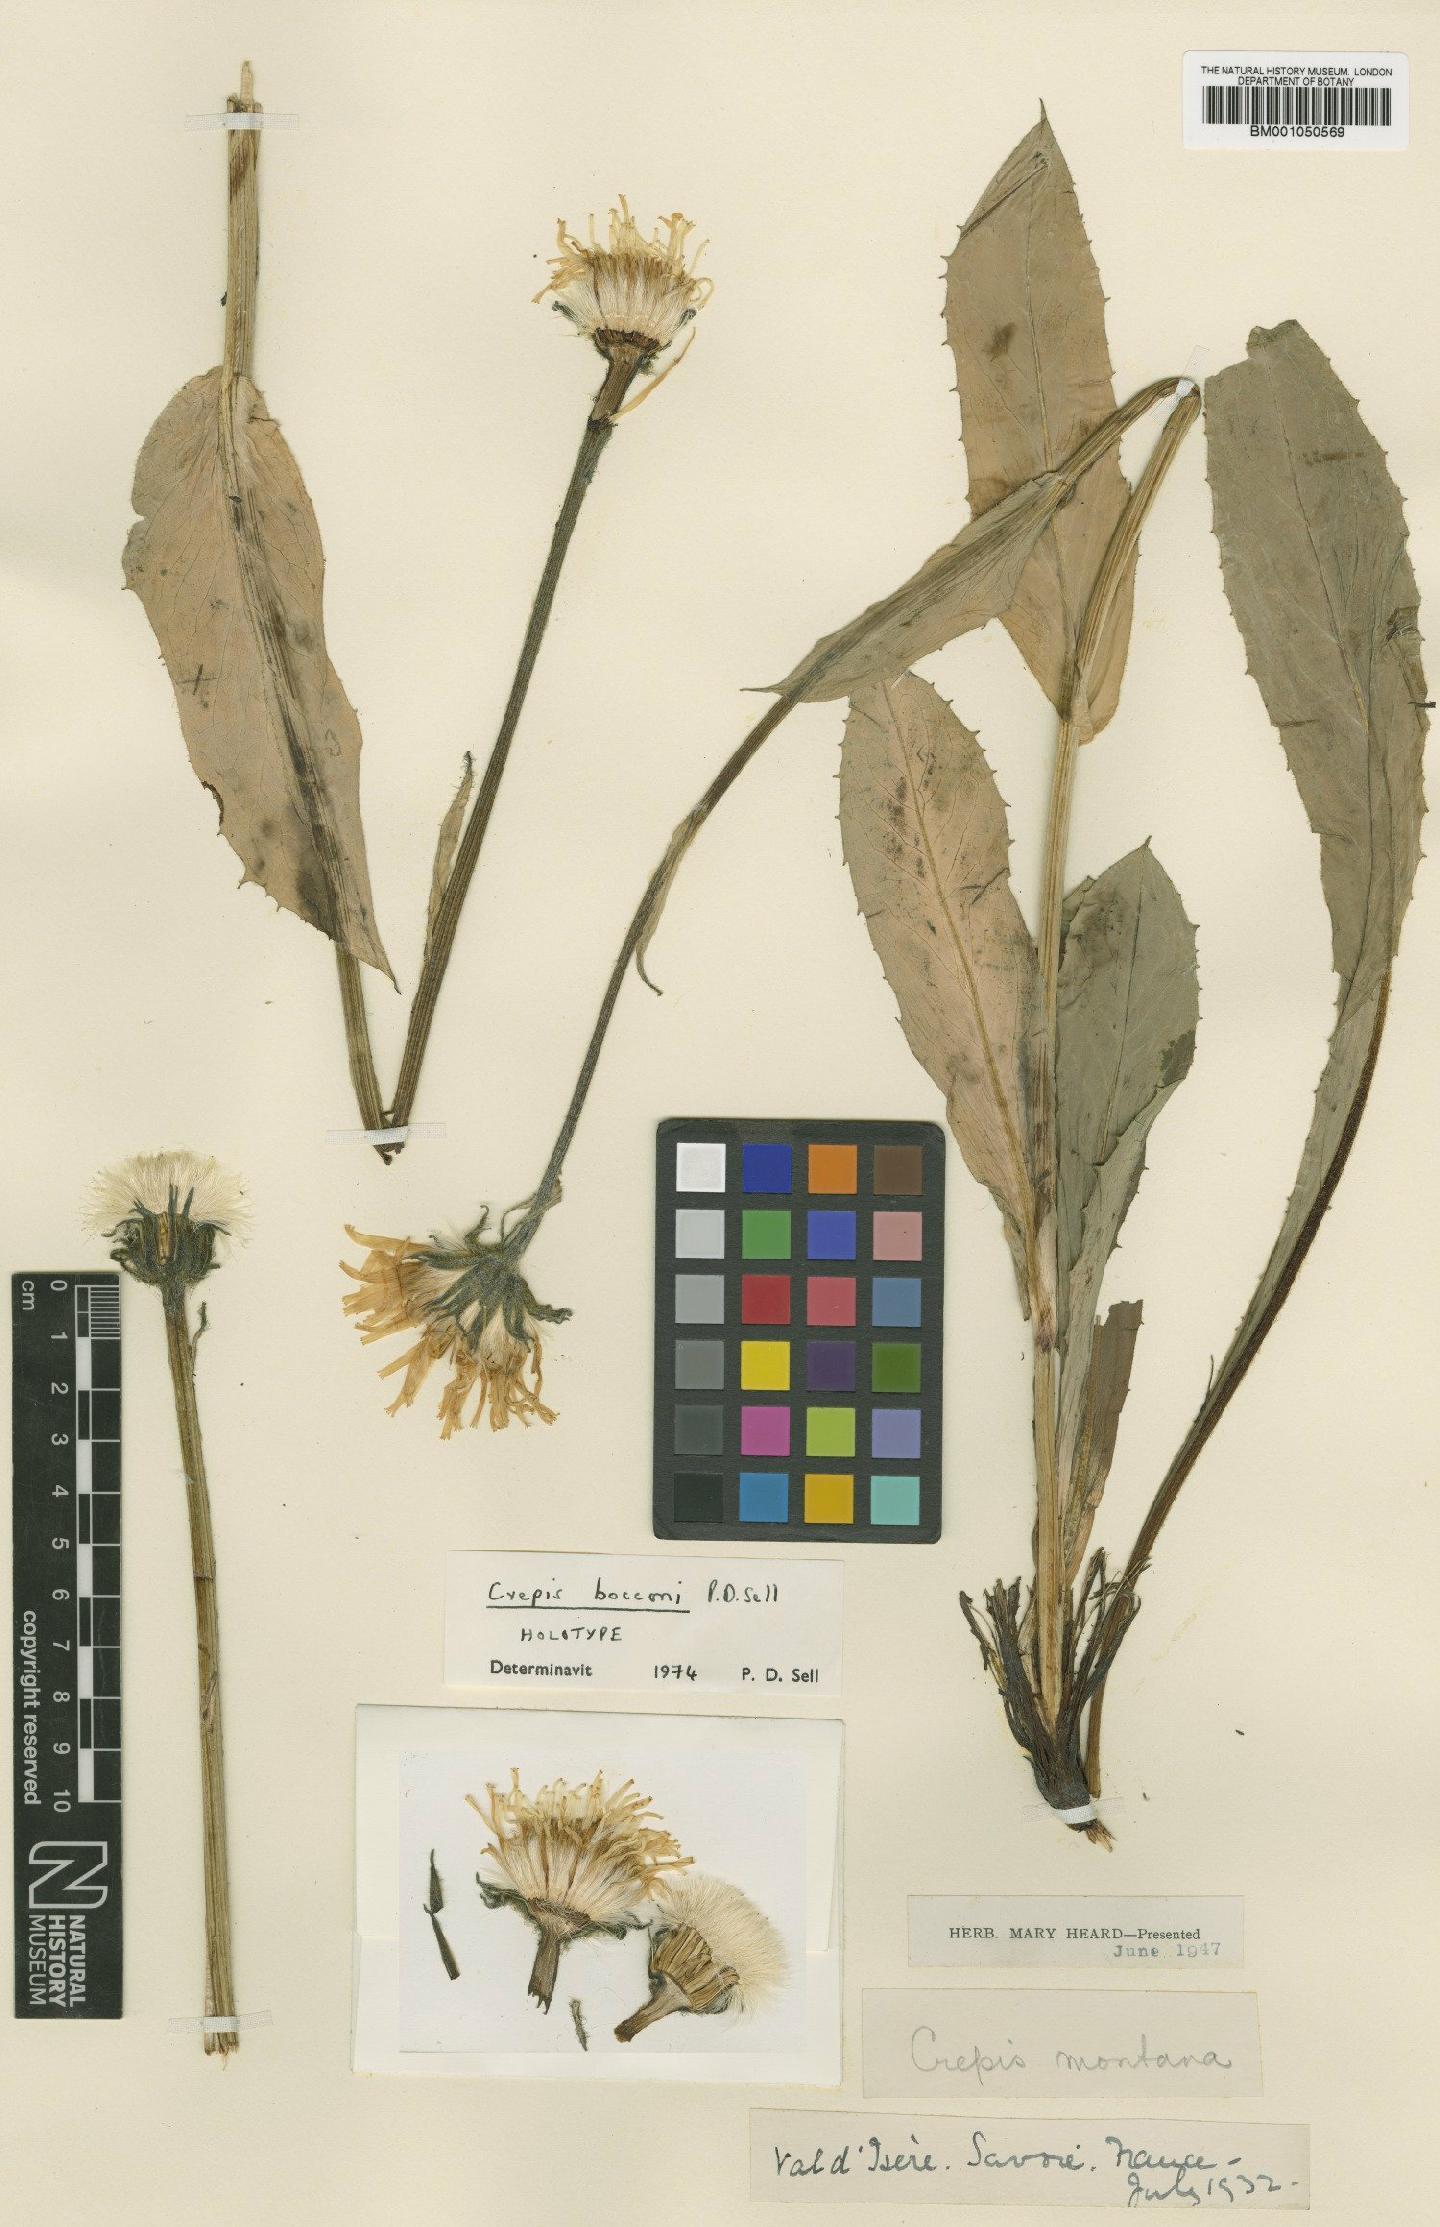 To NHMUK collection (Crepis bocconi P.D.Sell; Holotype; NHMUK:ecatalogue:2395805)